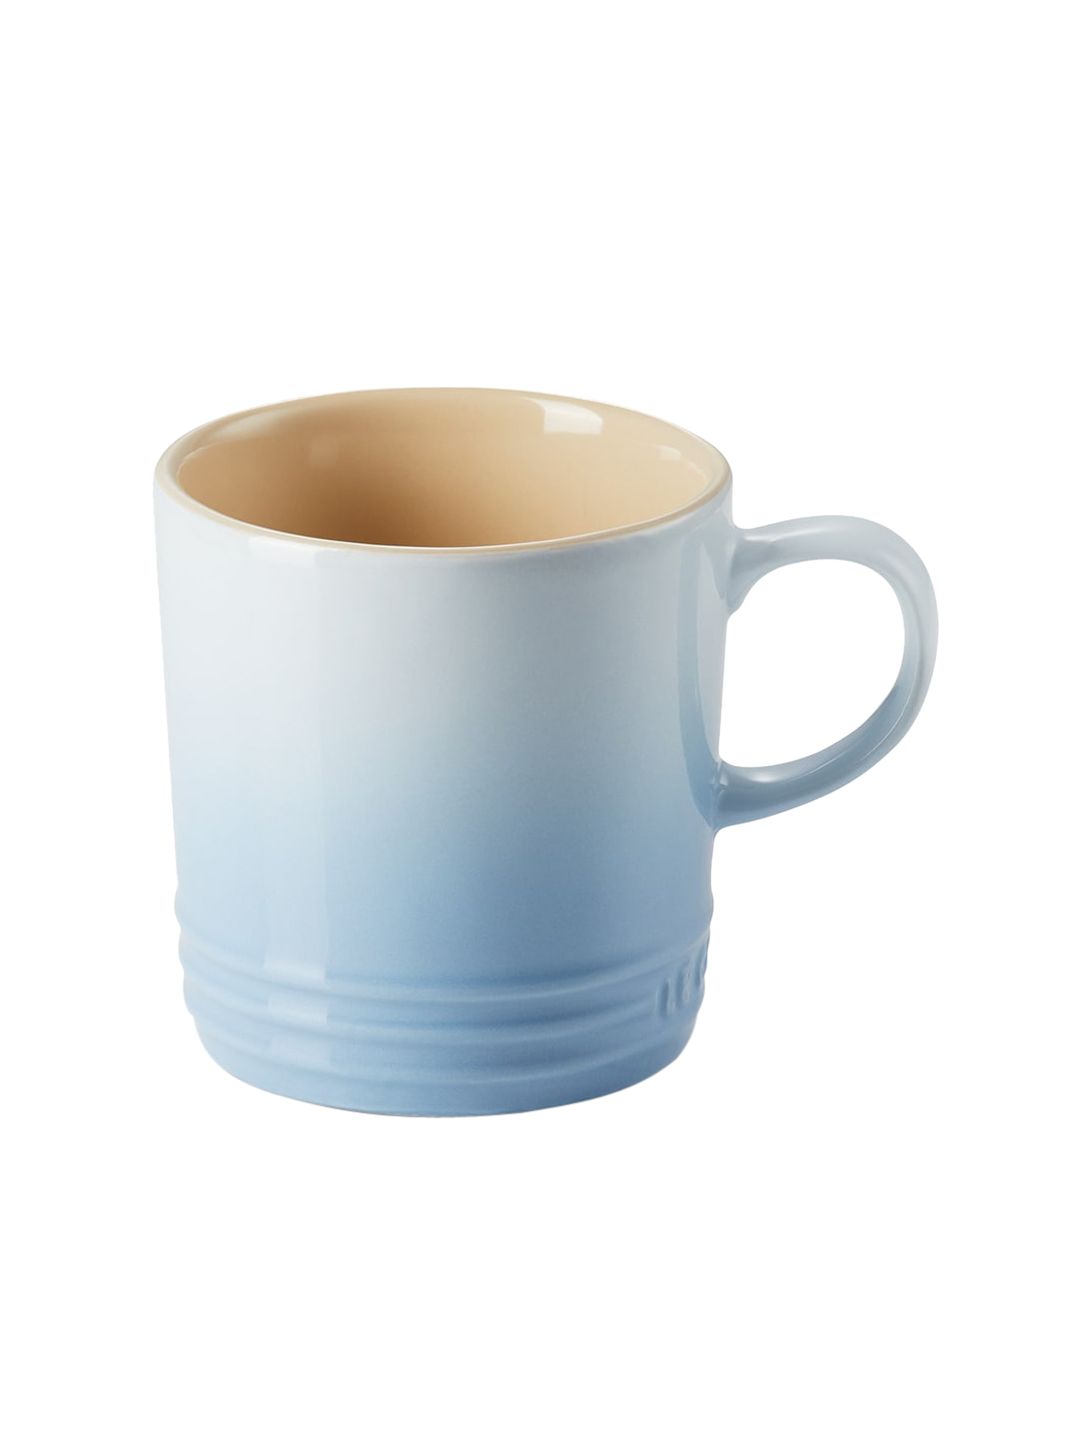 LE CREUSET Coastal Blue Solid Stoneware Glossy Mug Price in India